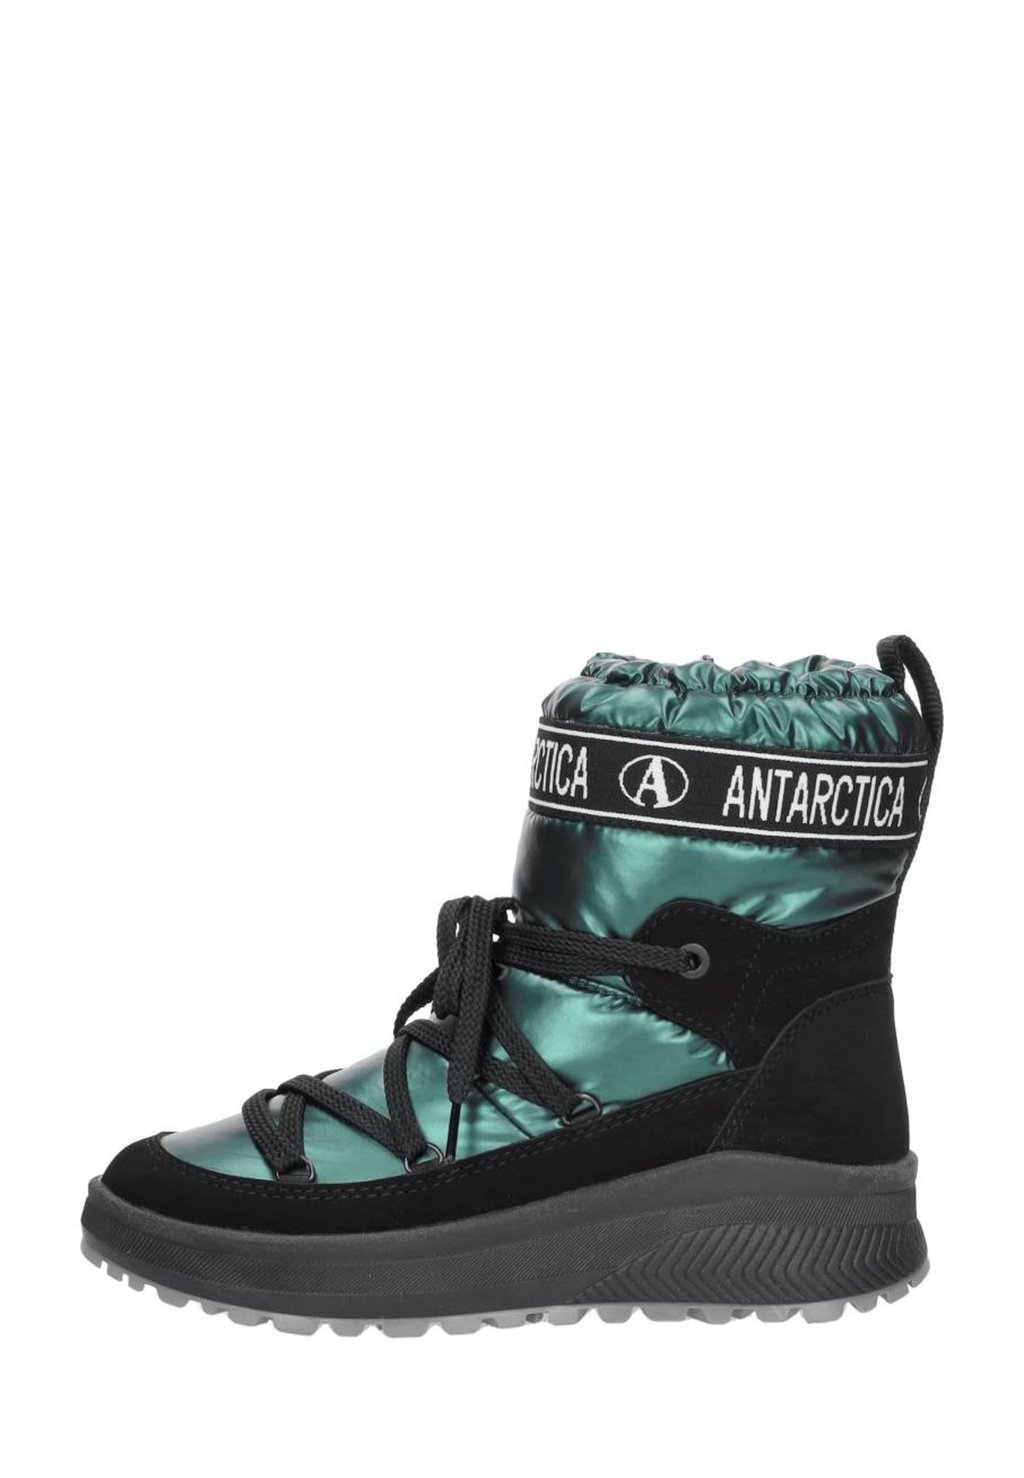 Зимние ботинки Antarctica Boots, цвет groen keegan claire antarctica